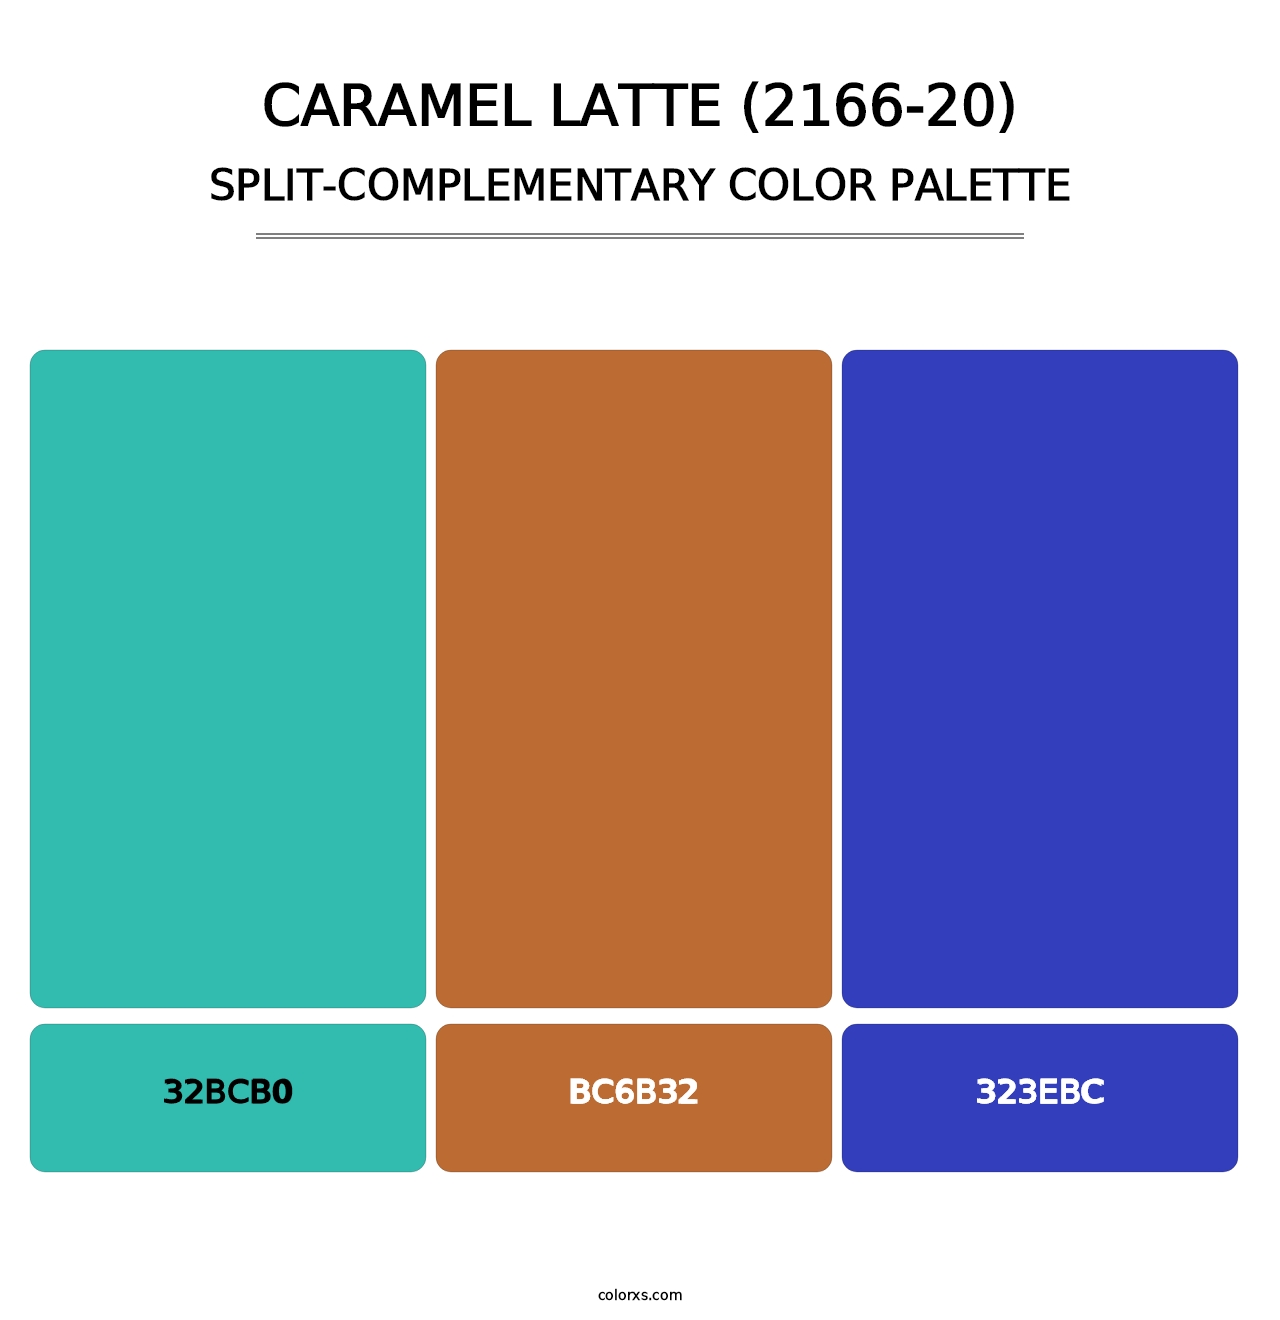 Caramel Latte (2166-20) - Split-Complementary Color Palette